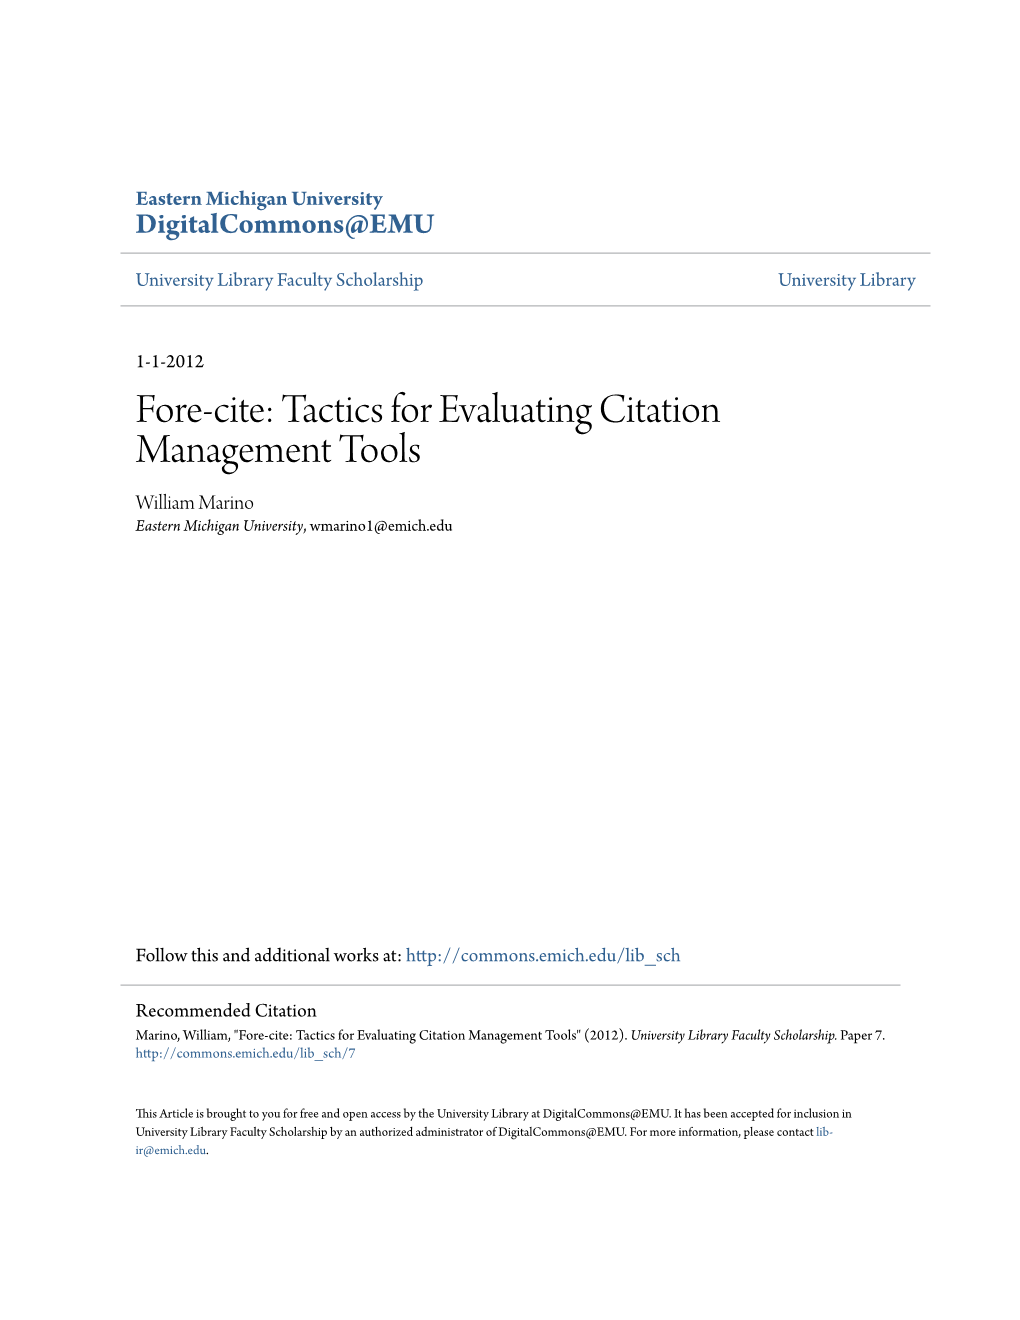 Tactics for Evaluating Citation Management Tools William Marino Eastern Michigan University, Wmarino1@Emich.Edu